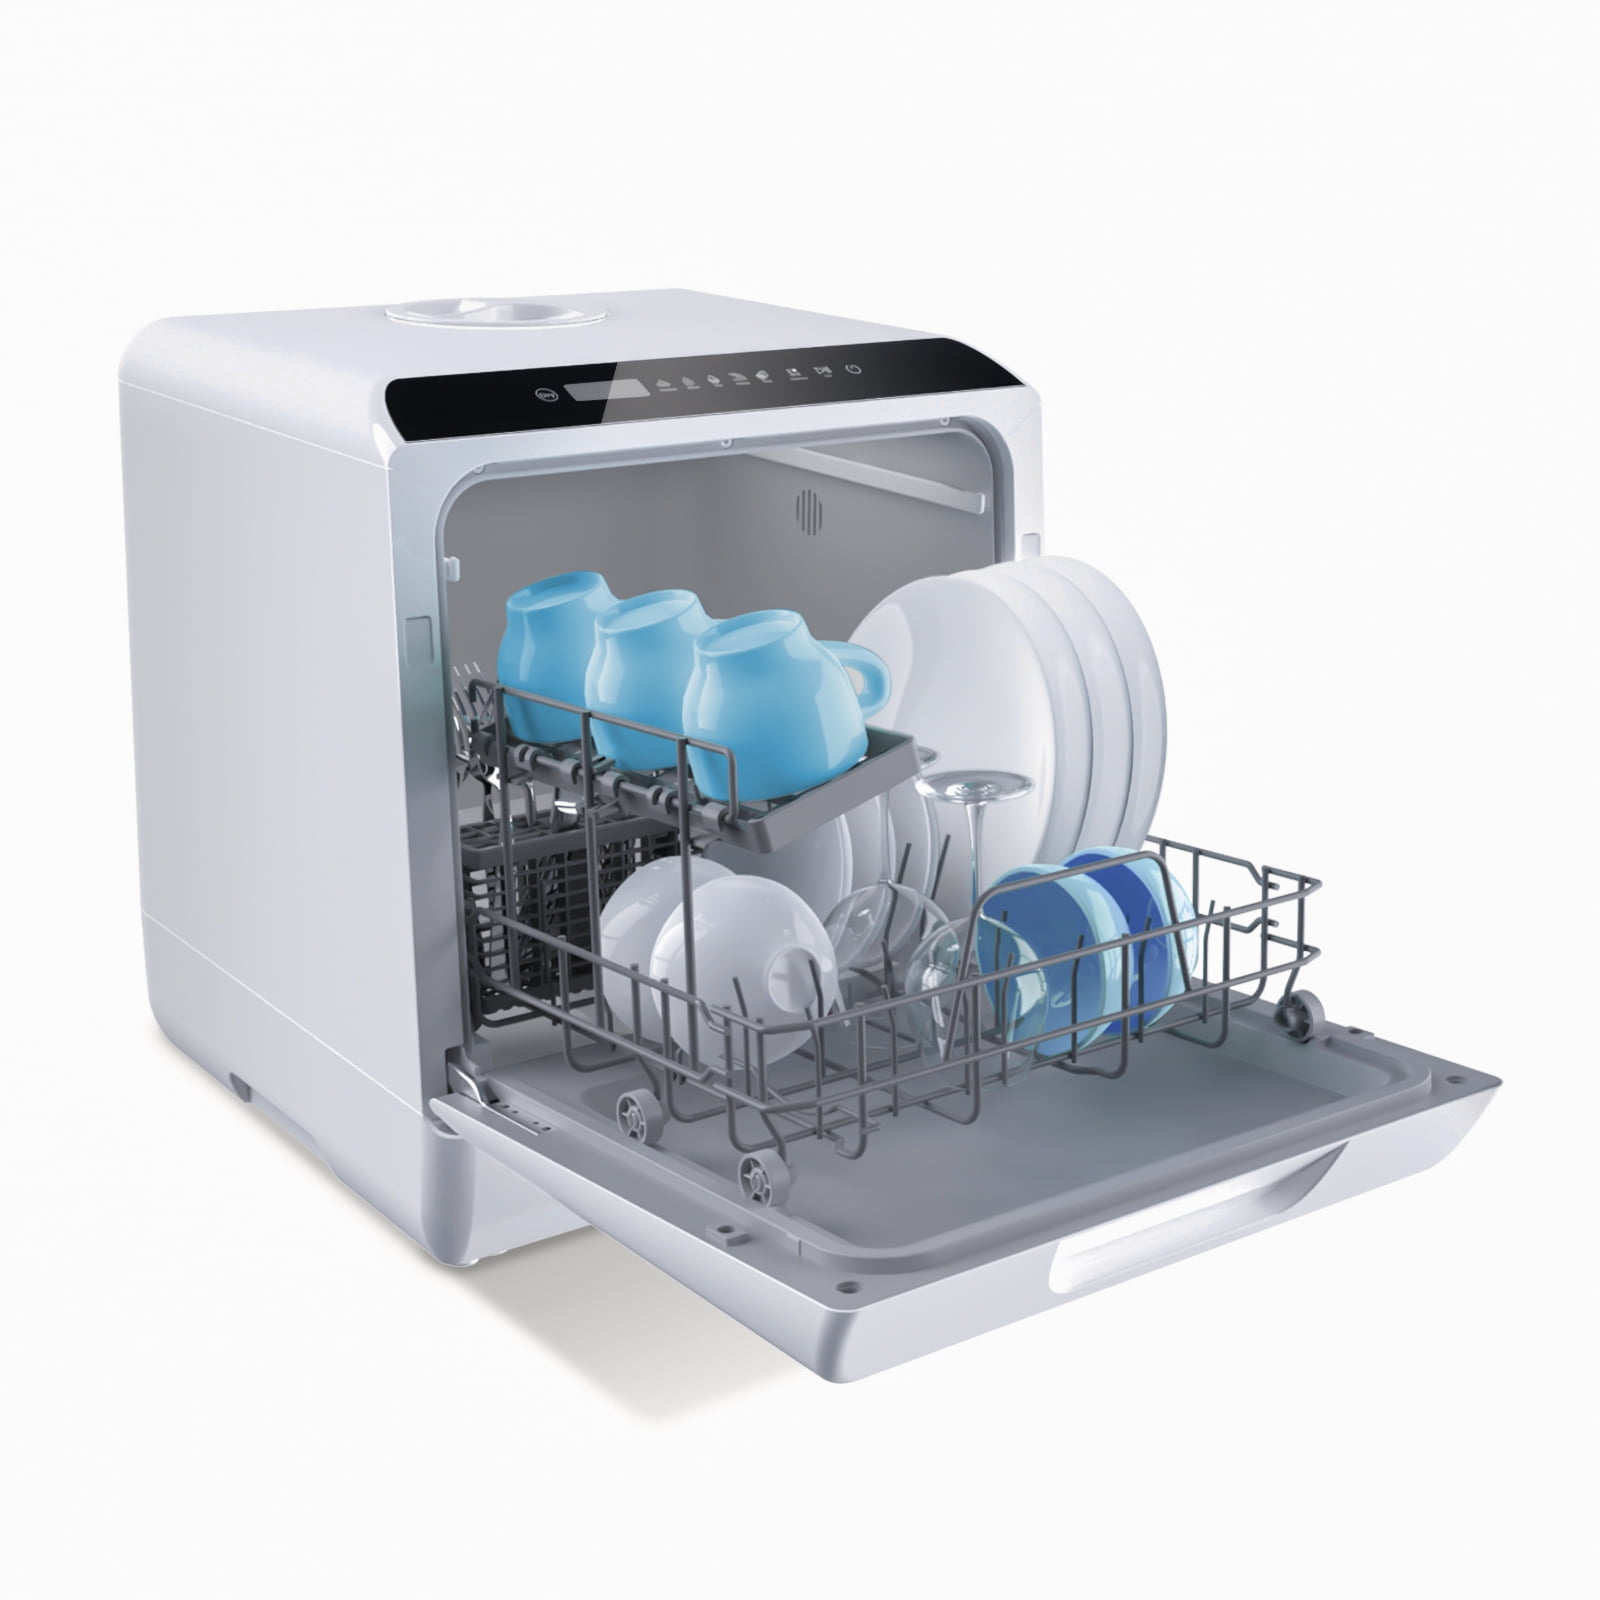  IAGREEA Portable Countertop Dishwasher, No Hookup Needed,  Compact Dishwasher